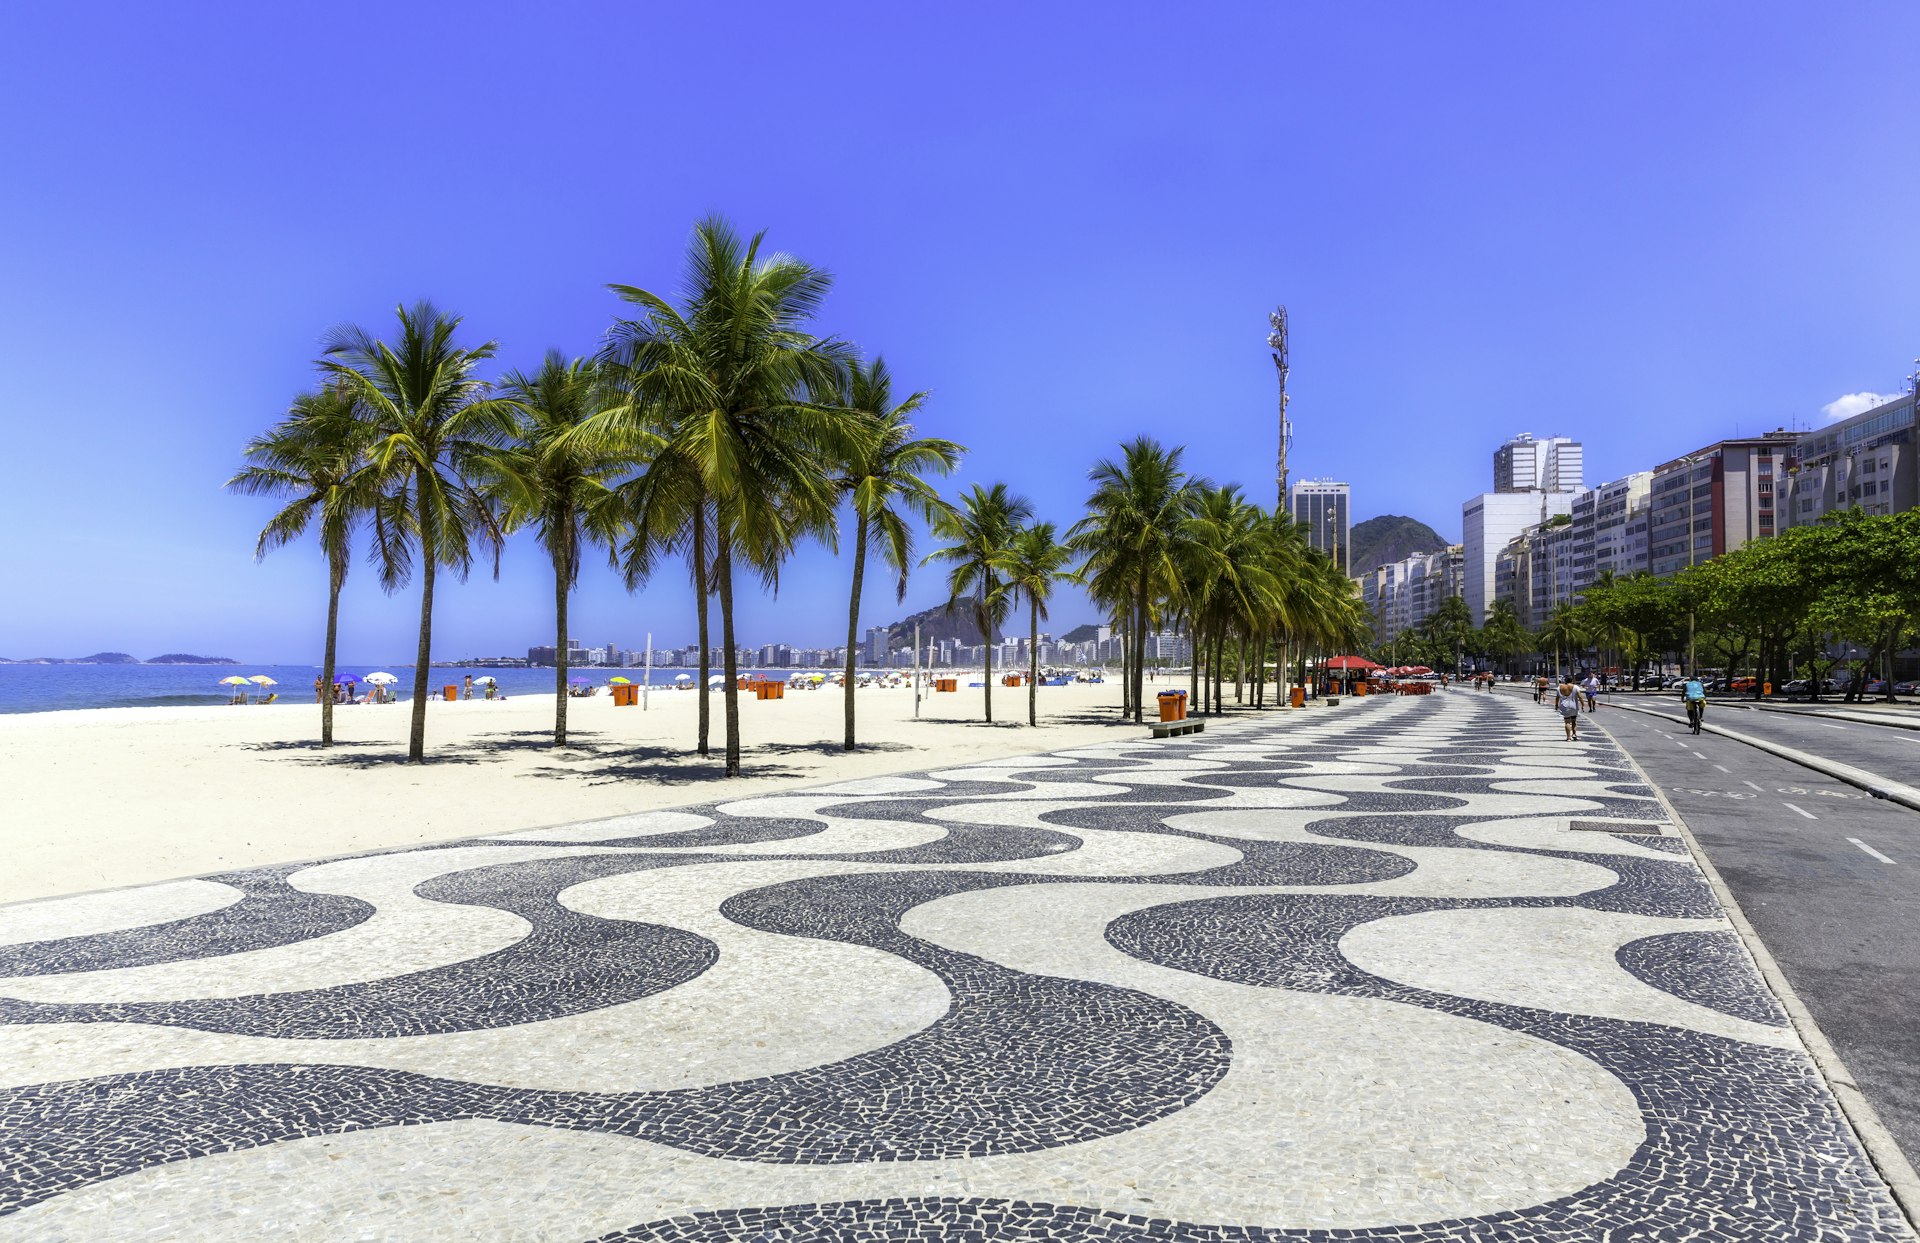 A walkway with palm trees along Copacabana Beach, Rio de Janeiro, Brazil